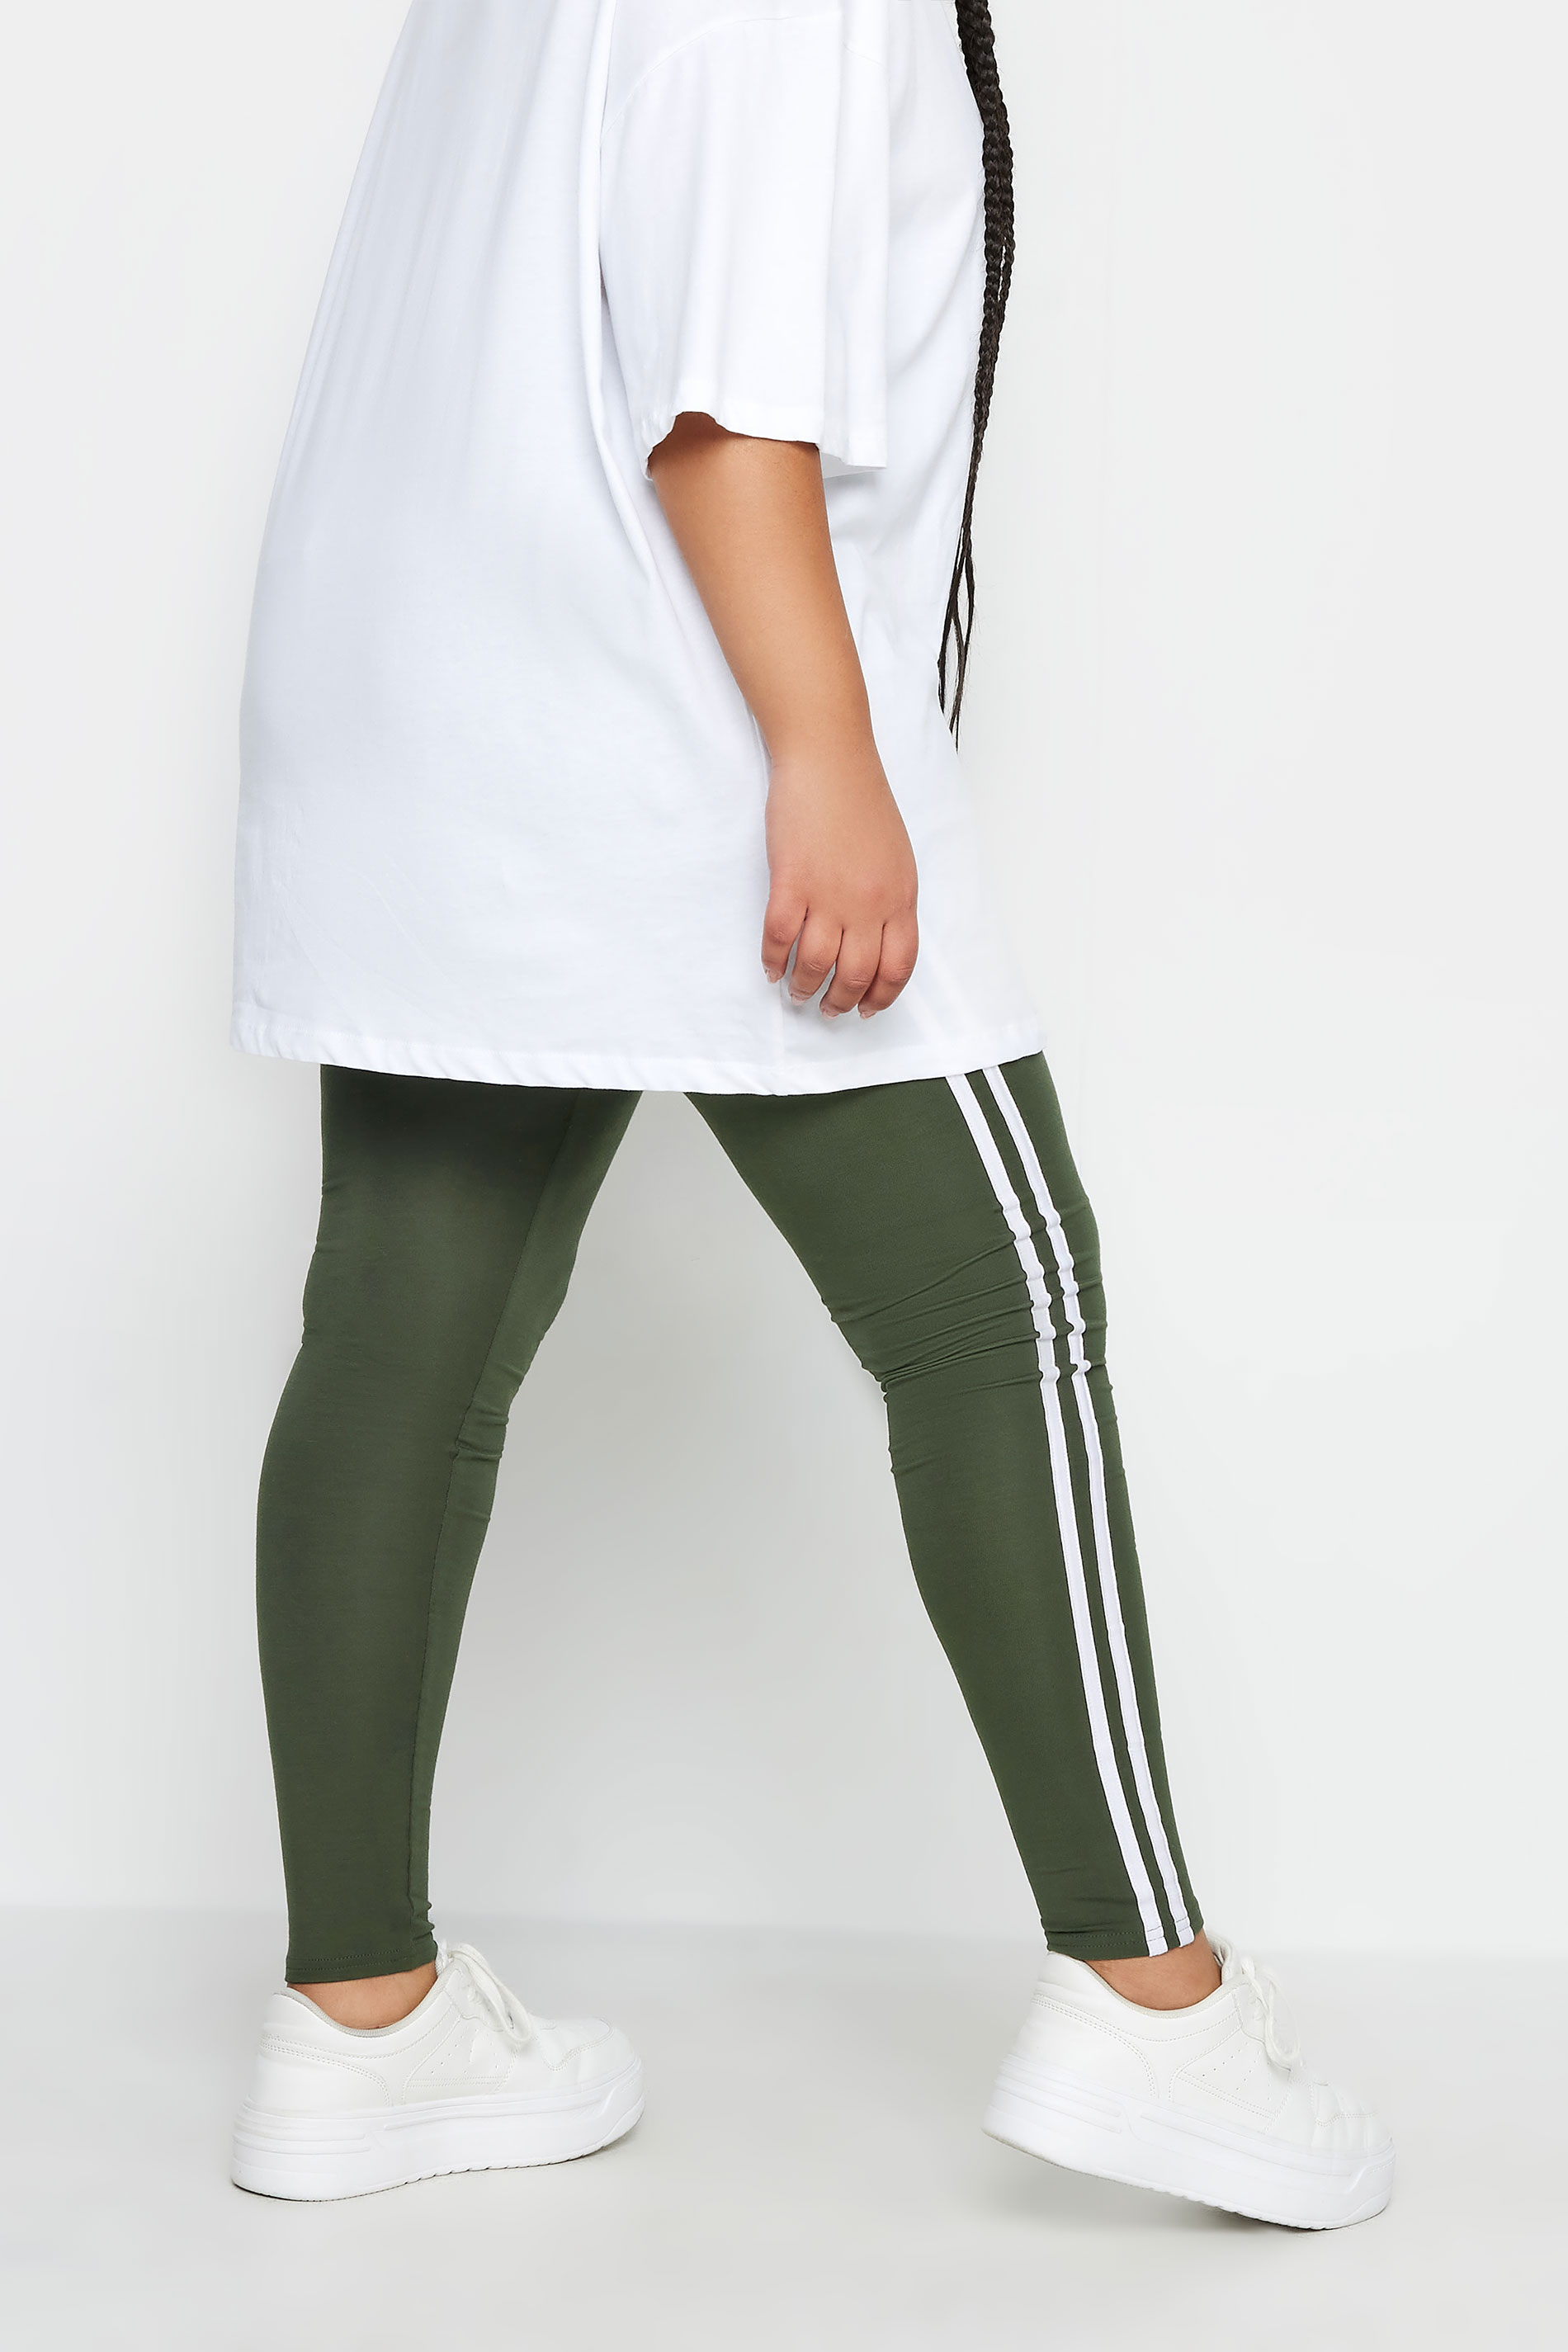 YOURS Plus Size Khaki Green Side Stripe Leggings | Yours Clothing 3